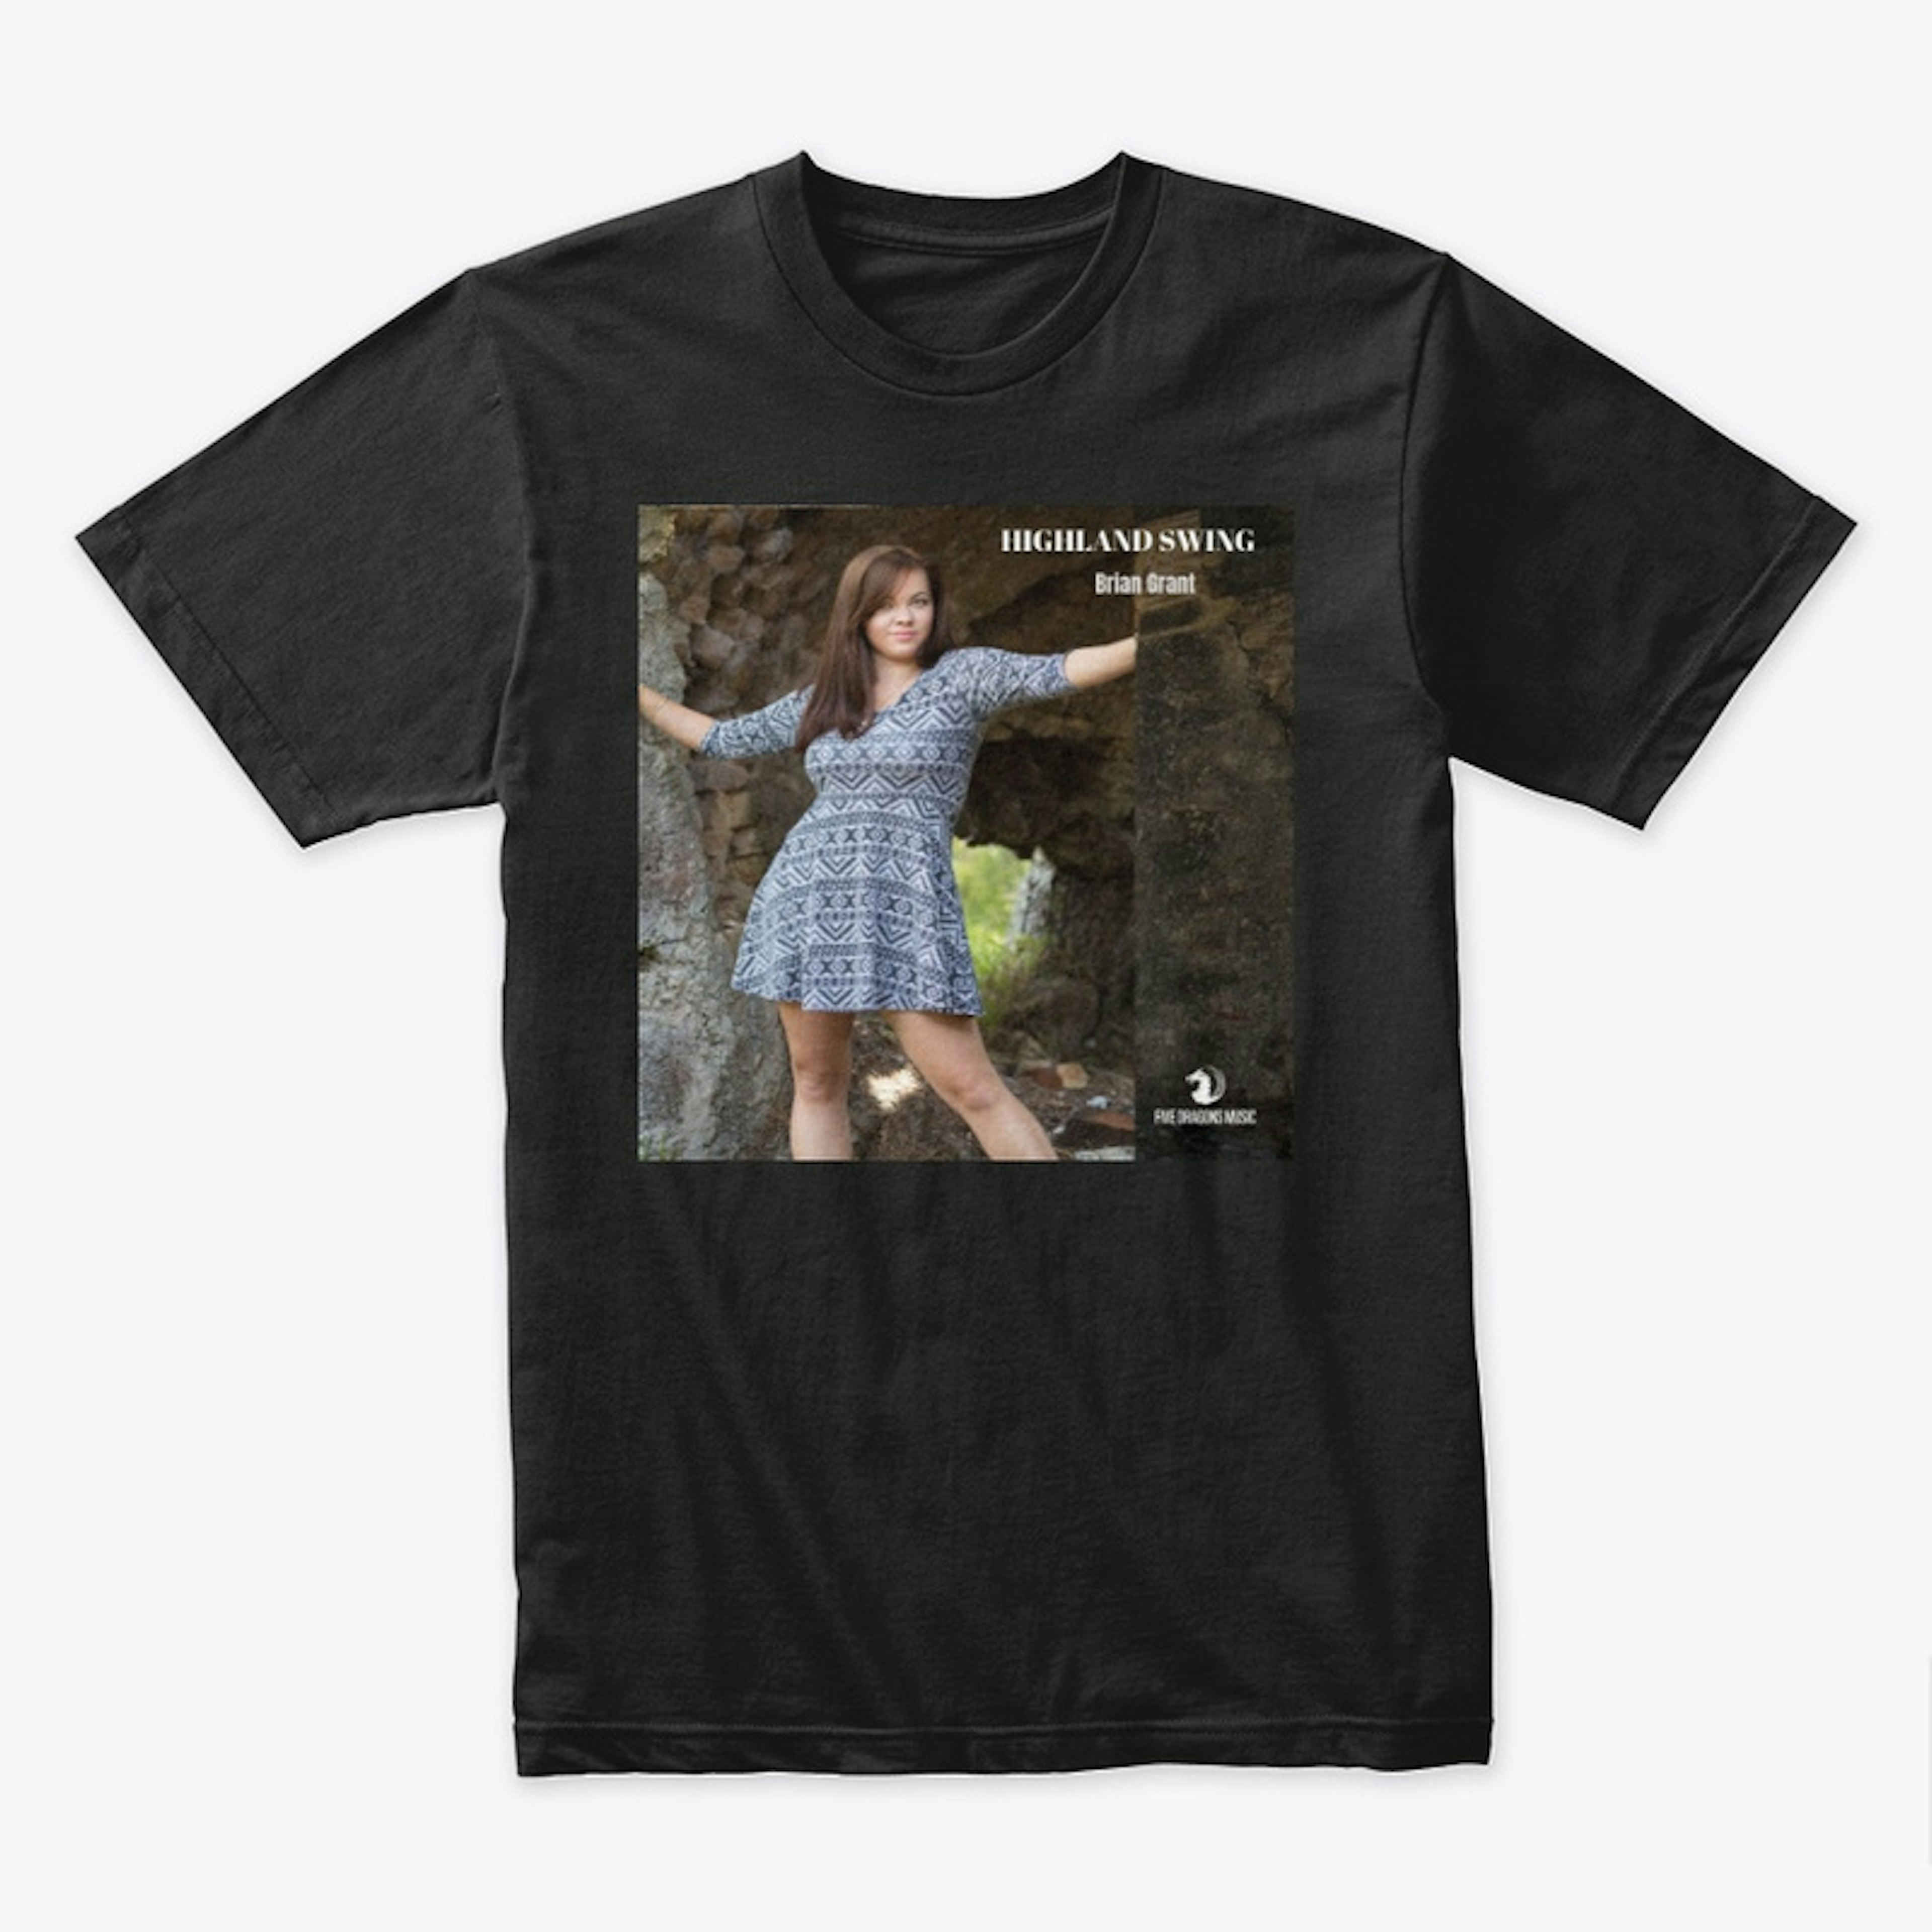 Highland Swing - Album Cover T-Shirt